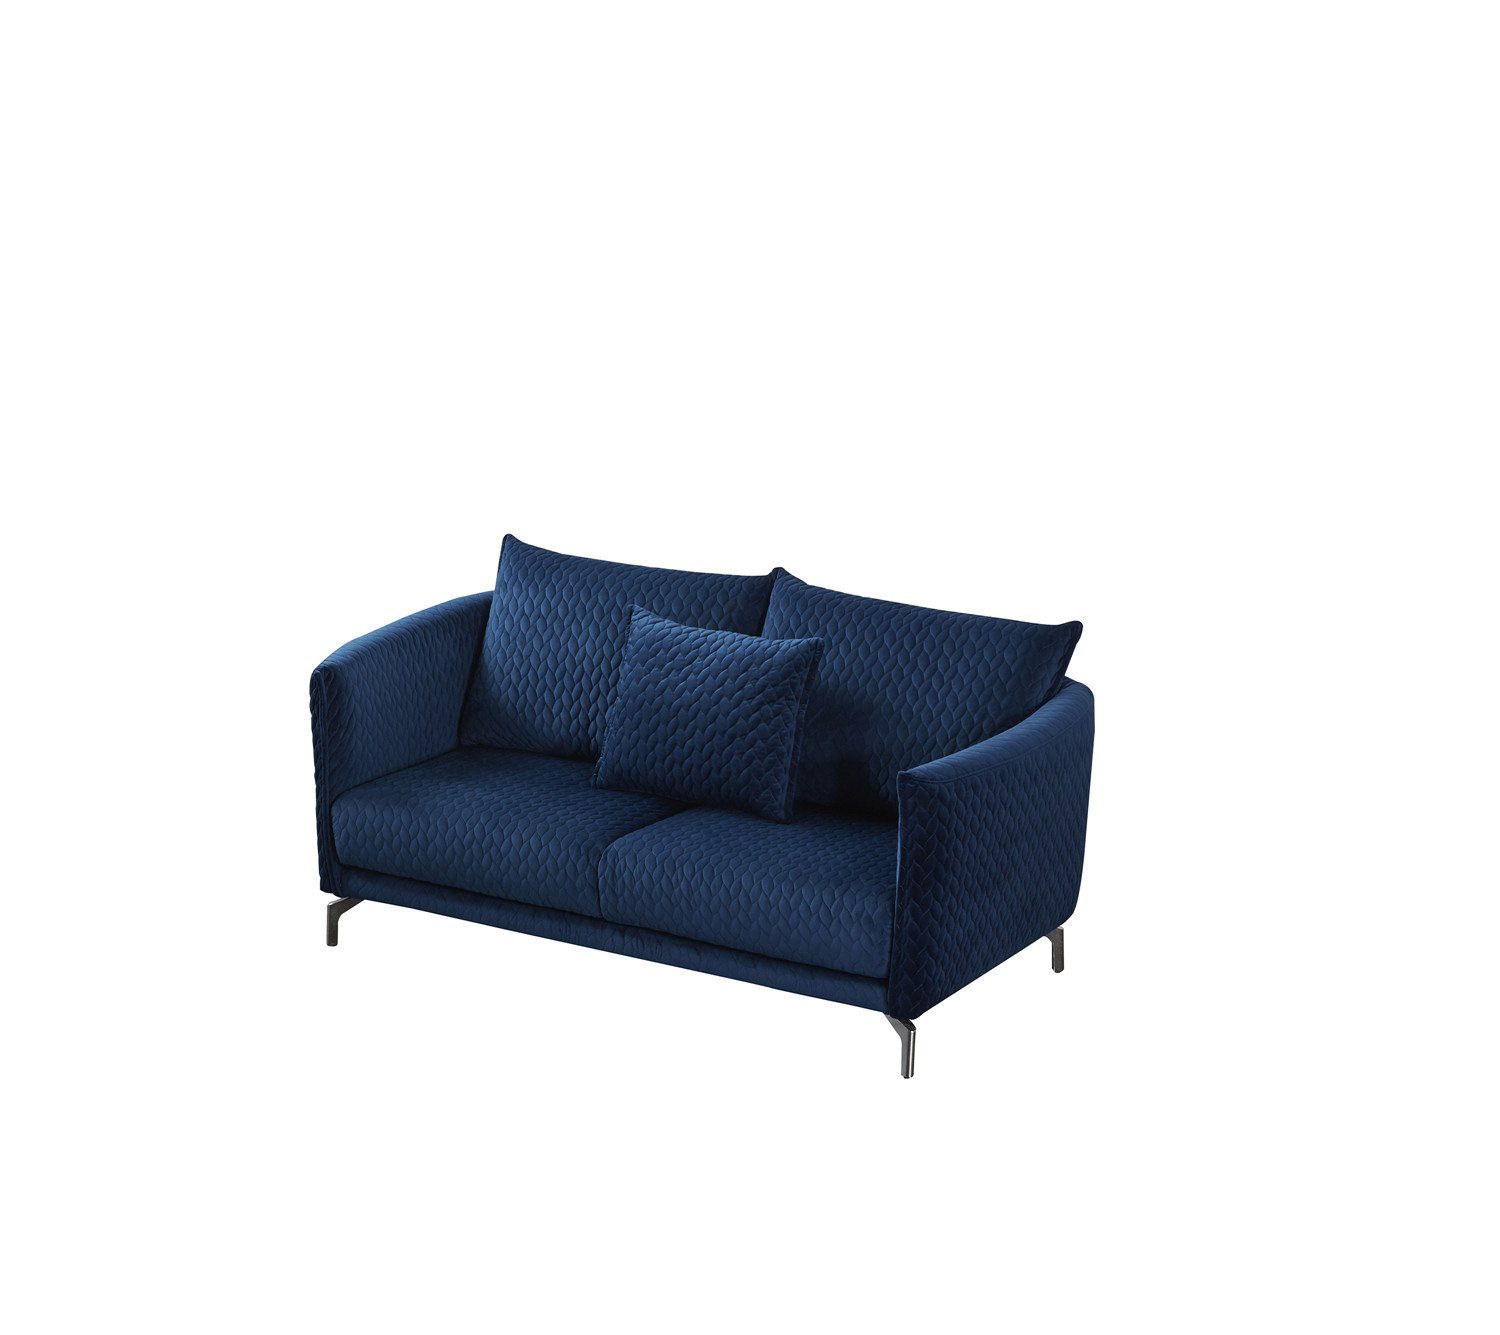 Design Textil Sitzer Sofa Sitz Luxus Polster Couch Stoff Sofa JVmoebel 3 Sofa,